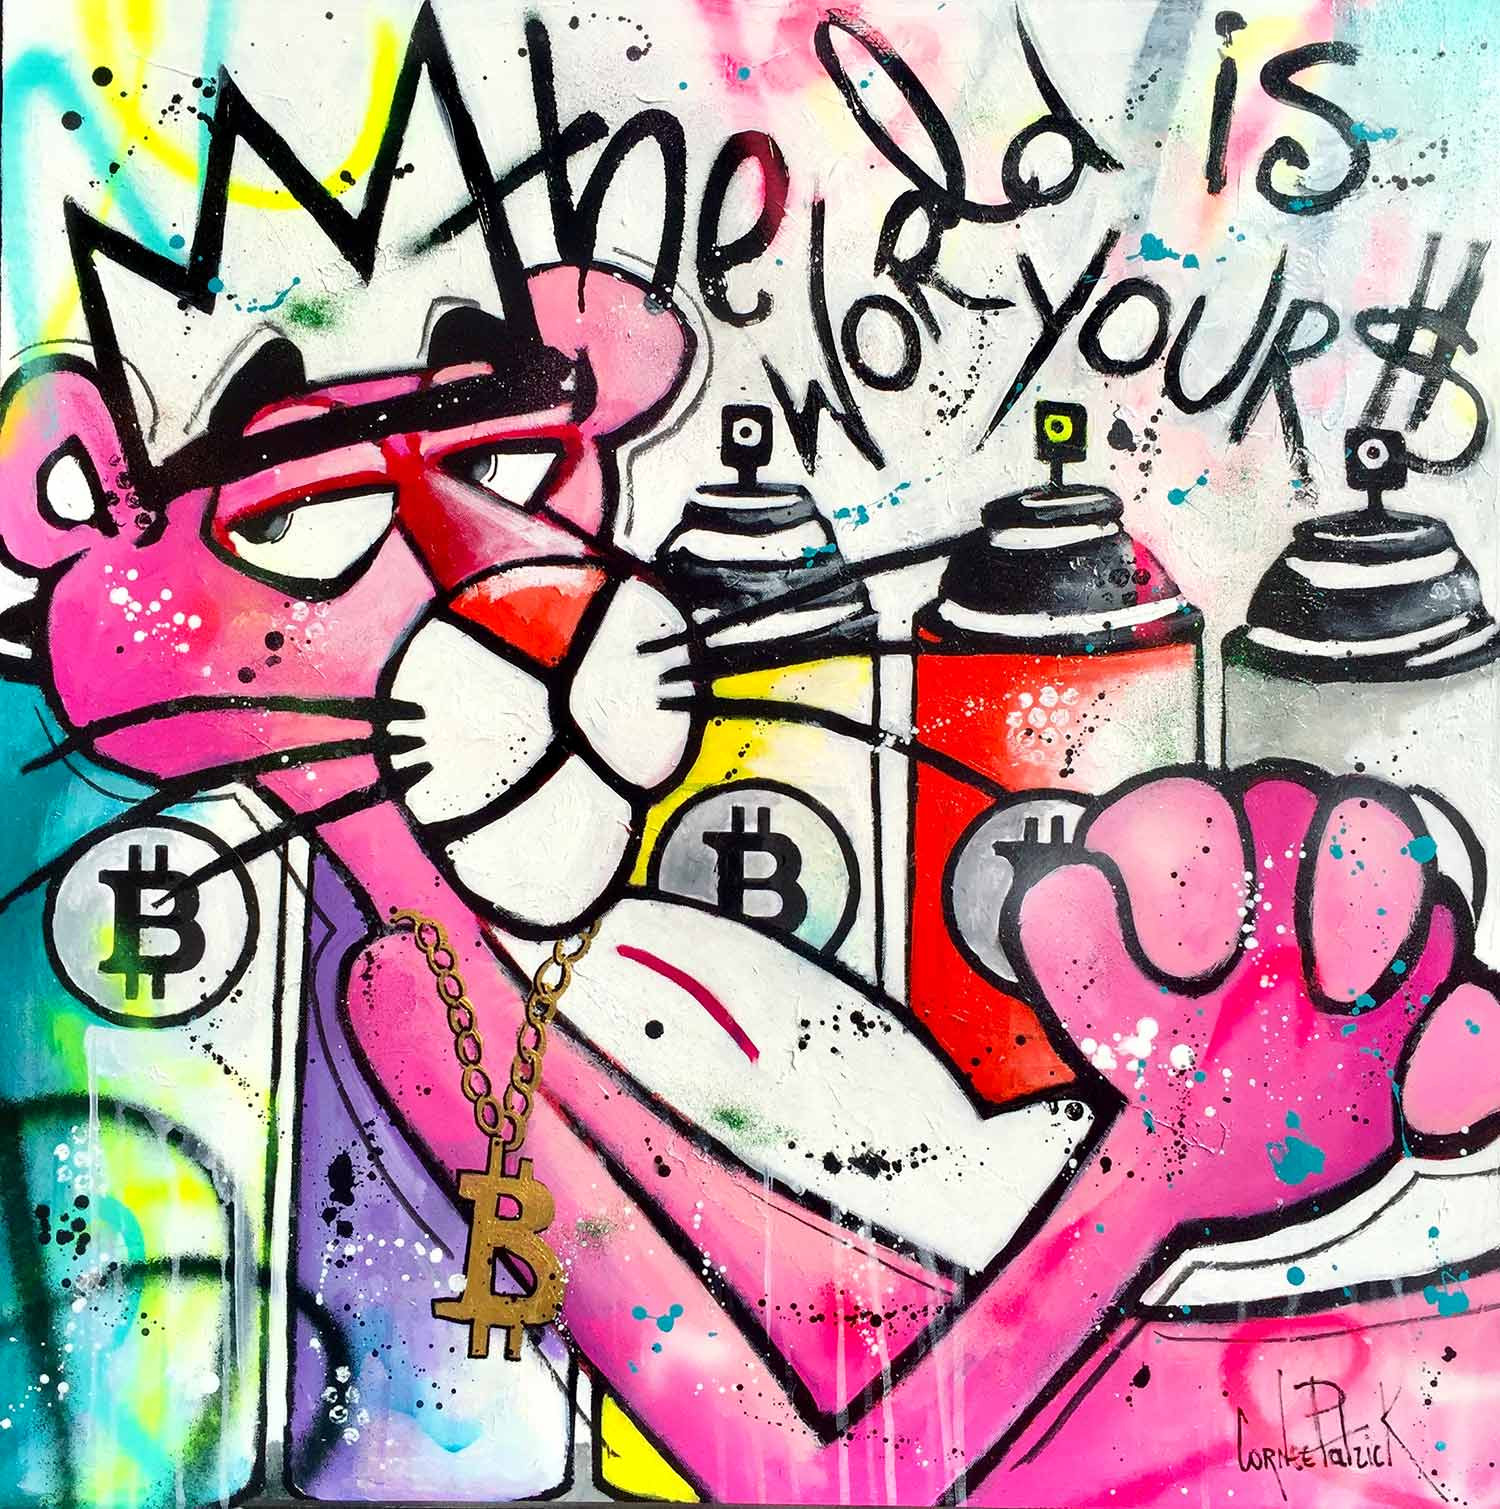 Pnk Panther Pop Art Fineart on Canvas Kunst 